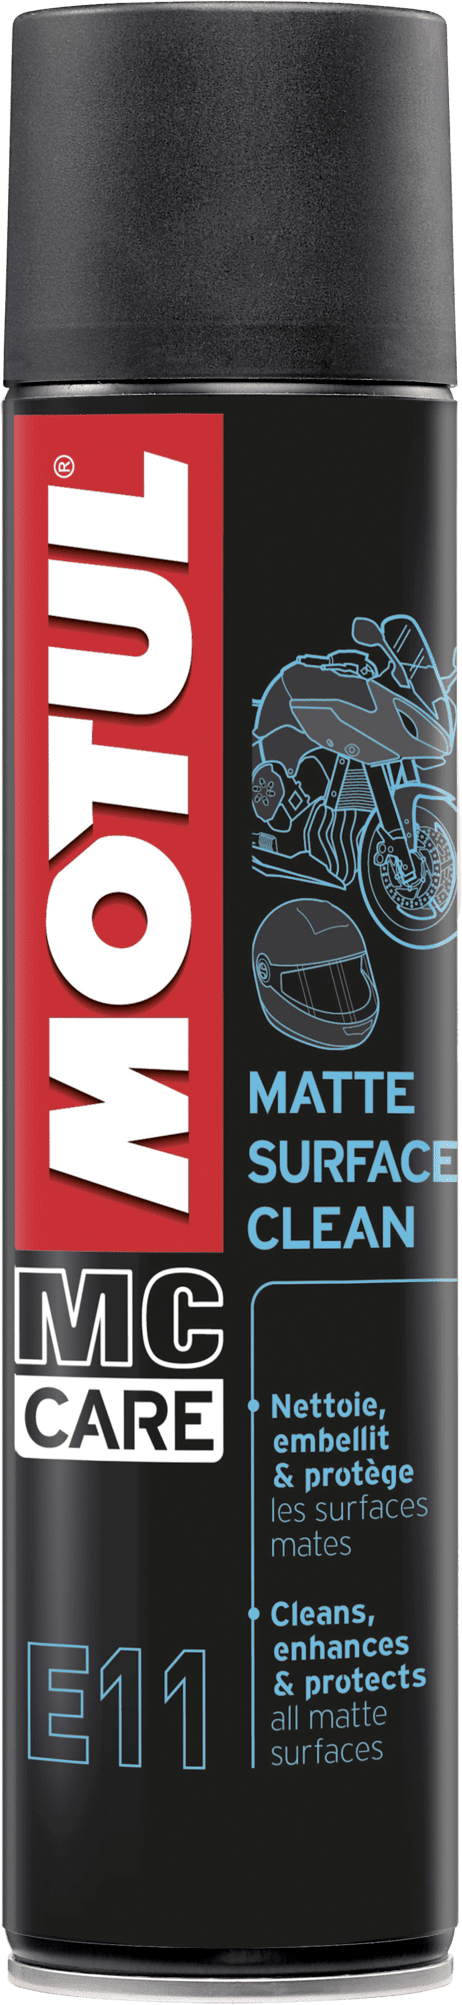 Motul MC Care E11 Matte Surface Clean, 400 ml